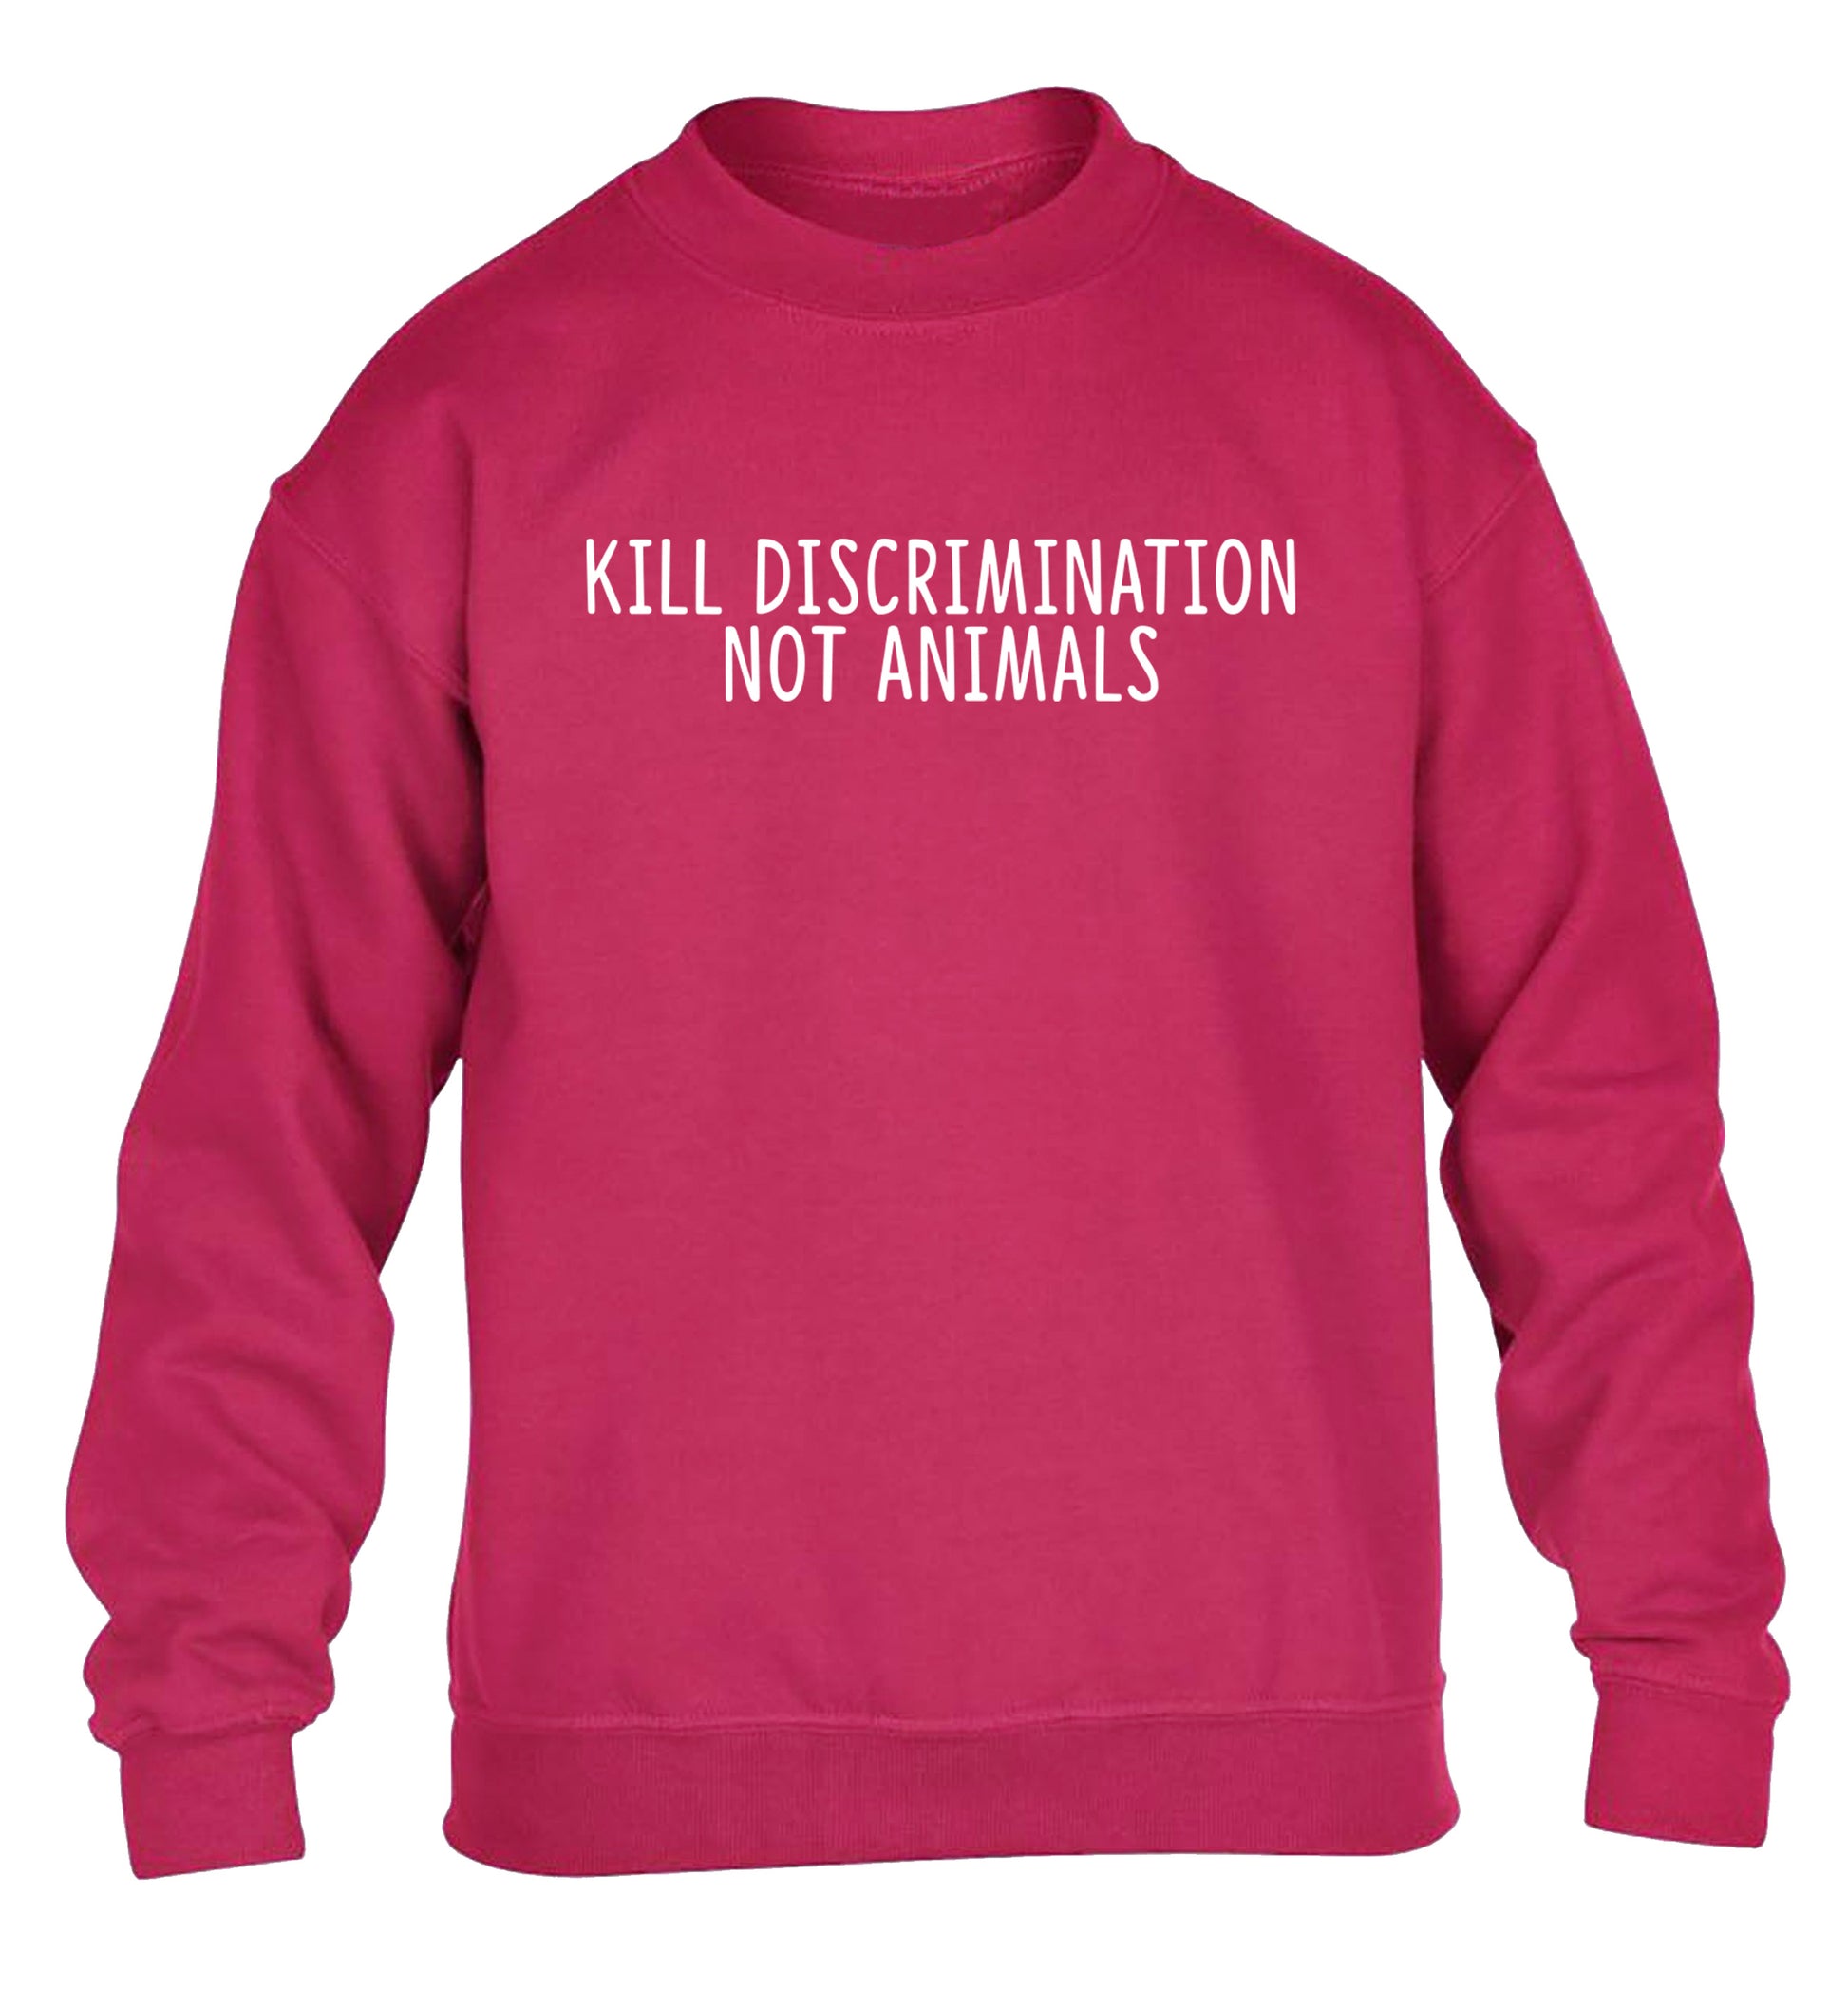 Kill Discrimination Not Animals children's pink sweater 12-13 Years